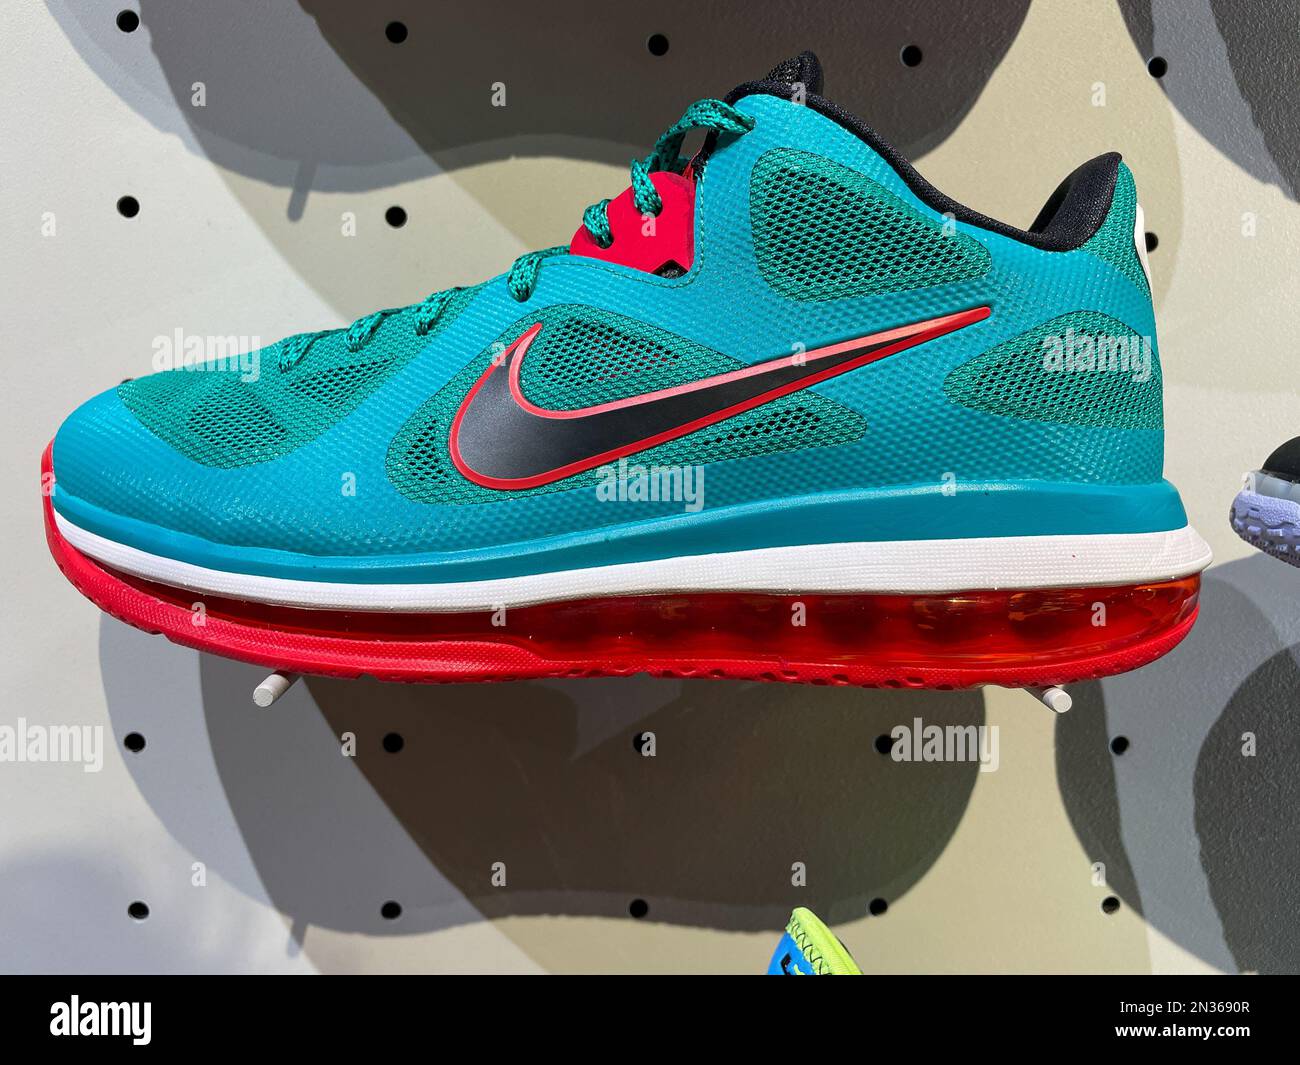 Blue-green Nike sneaker Stock Photo - Alamy